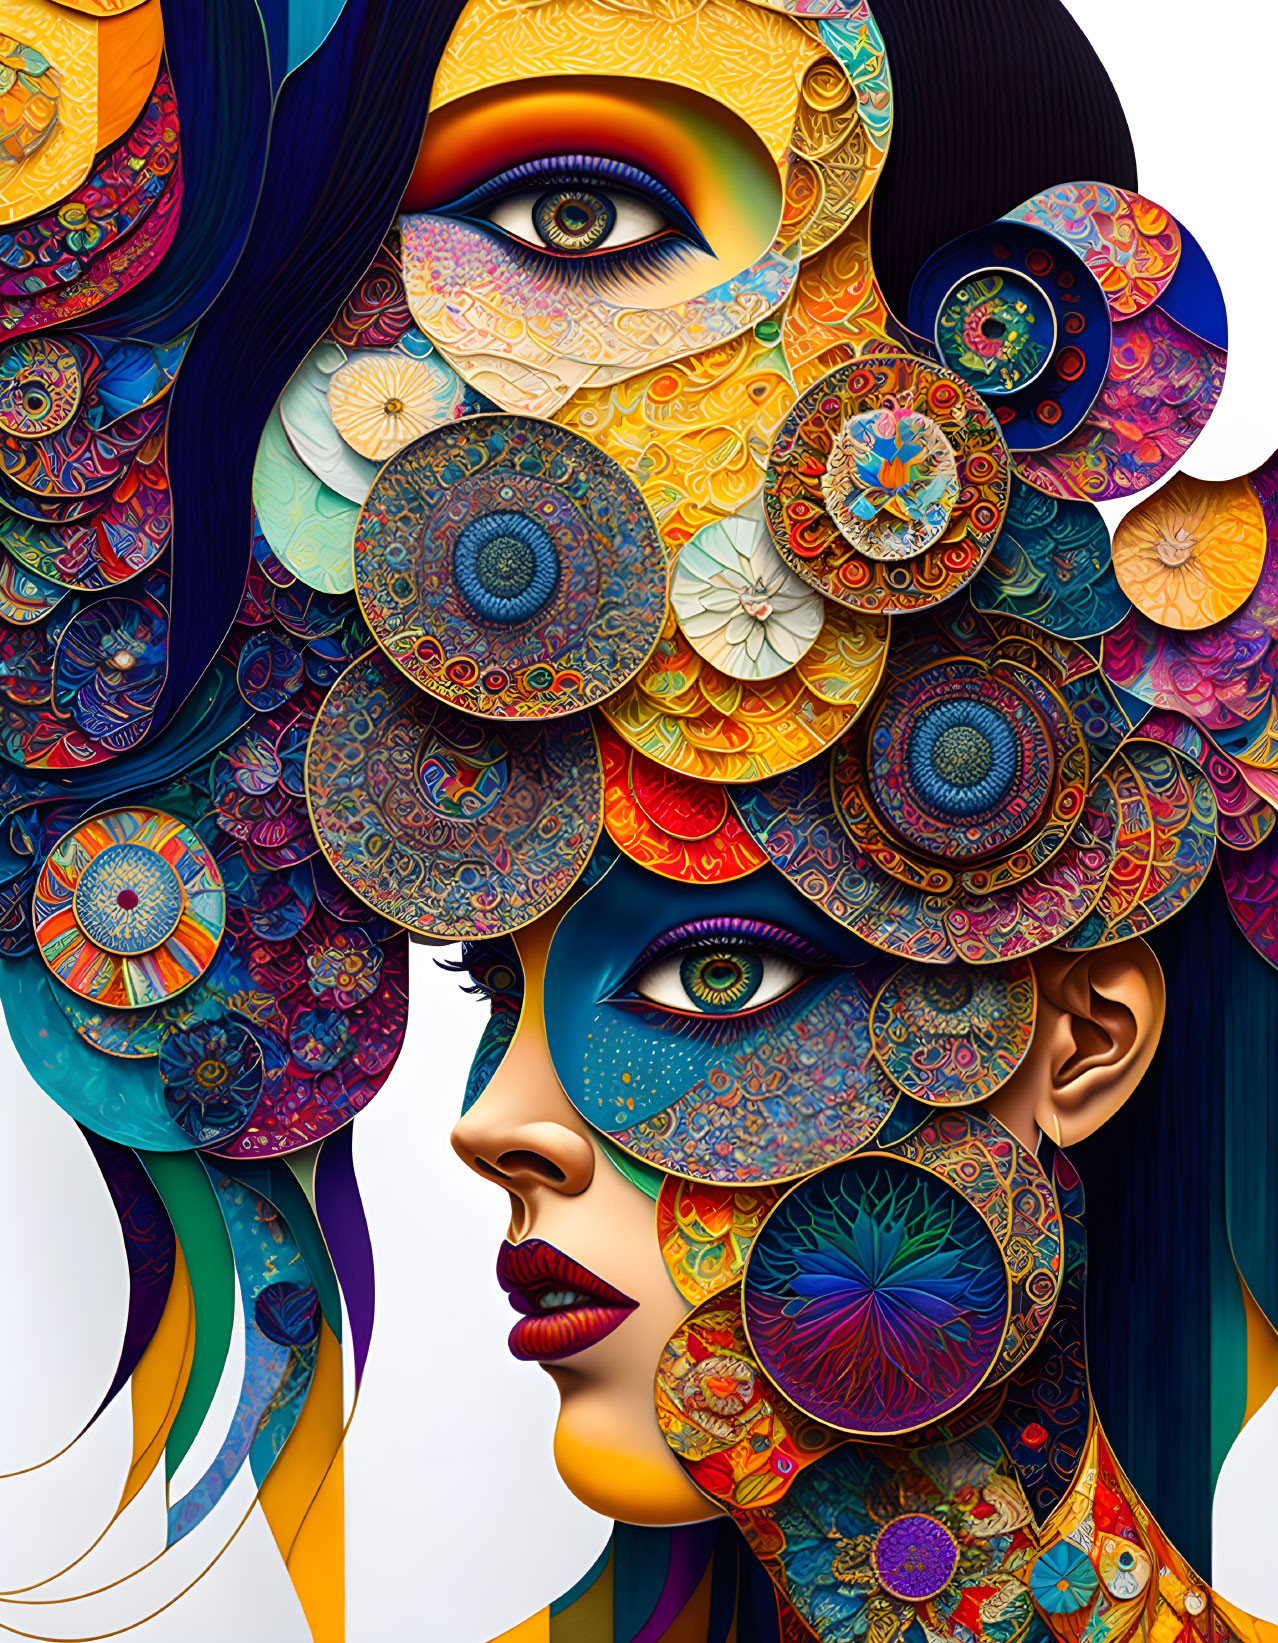 Colorful digital artwork: Woman's face with mandala designs